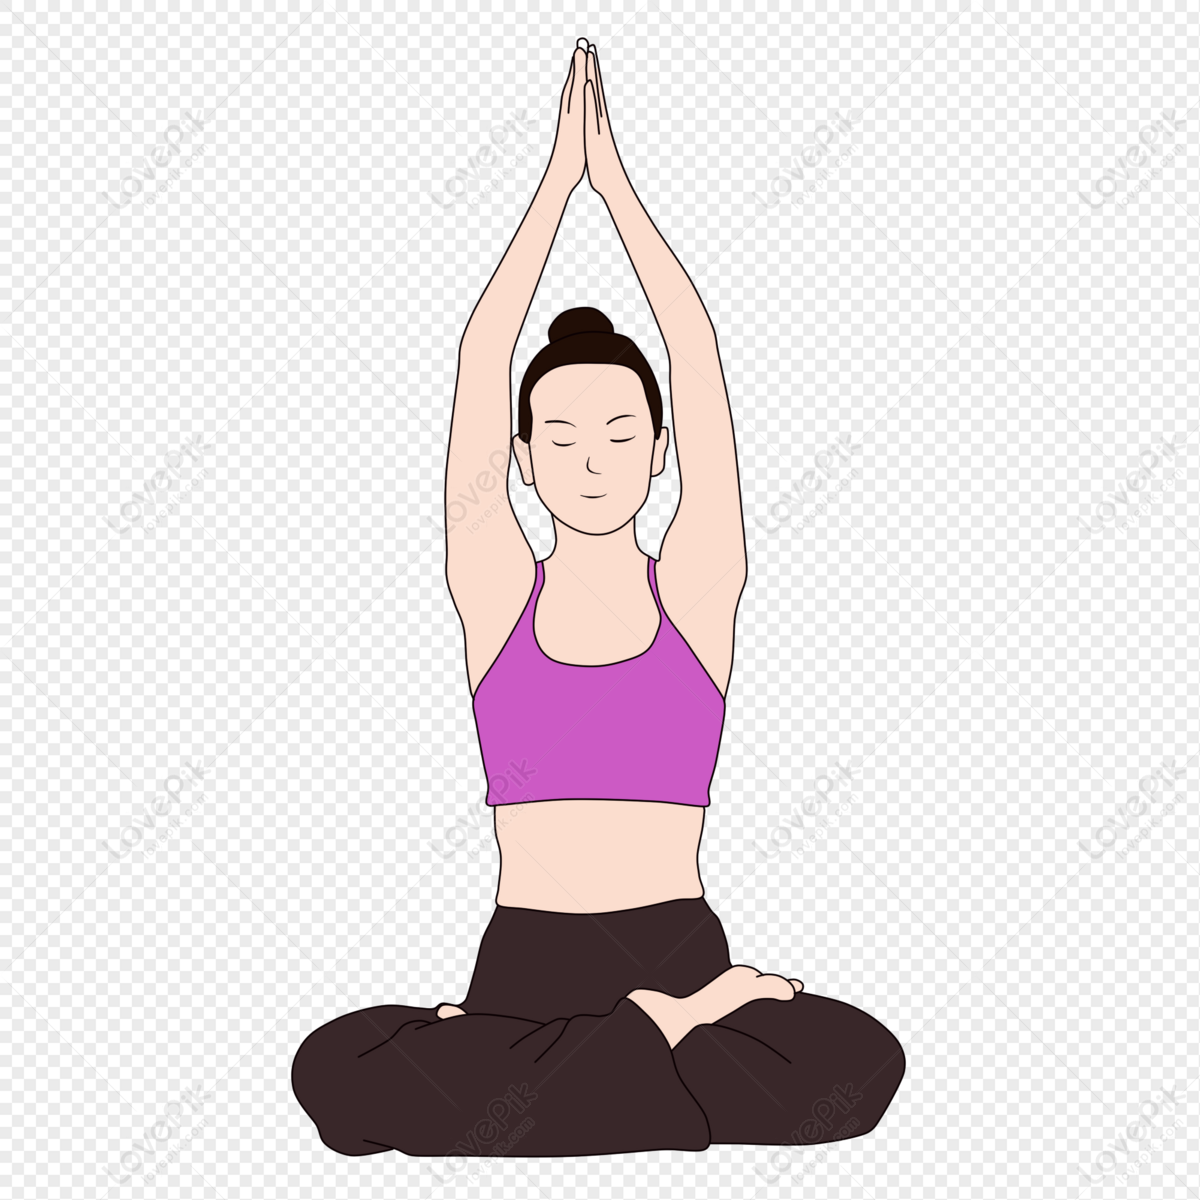 Free Yoga Pose Cliparts, Download Free Yoga Pose Cliparts png images, Free  ClipArts on Clipart Library